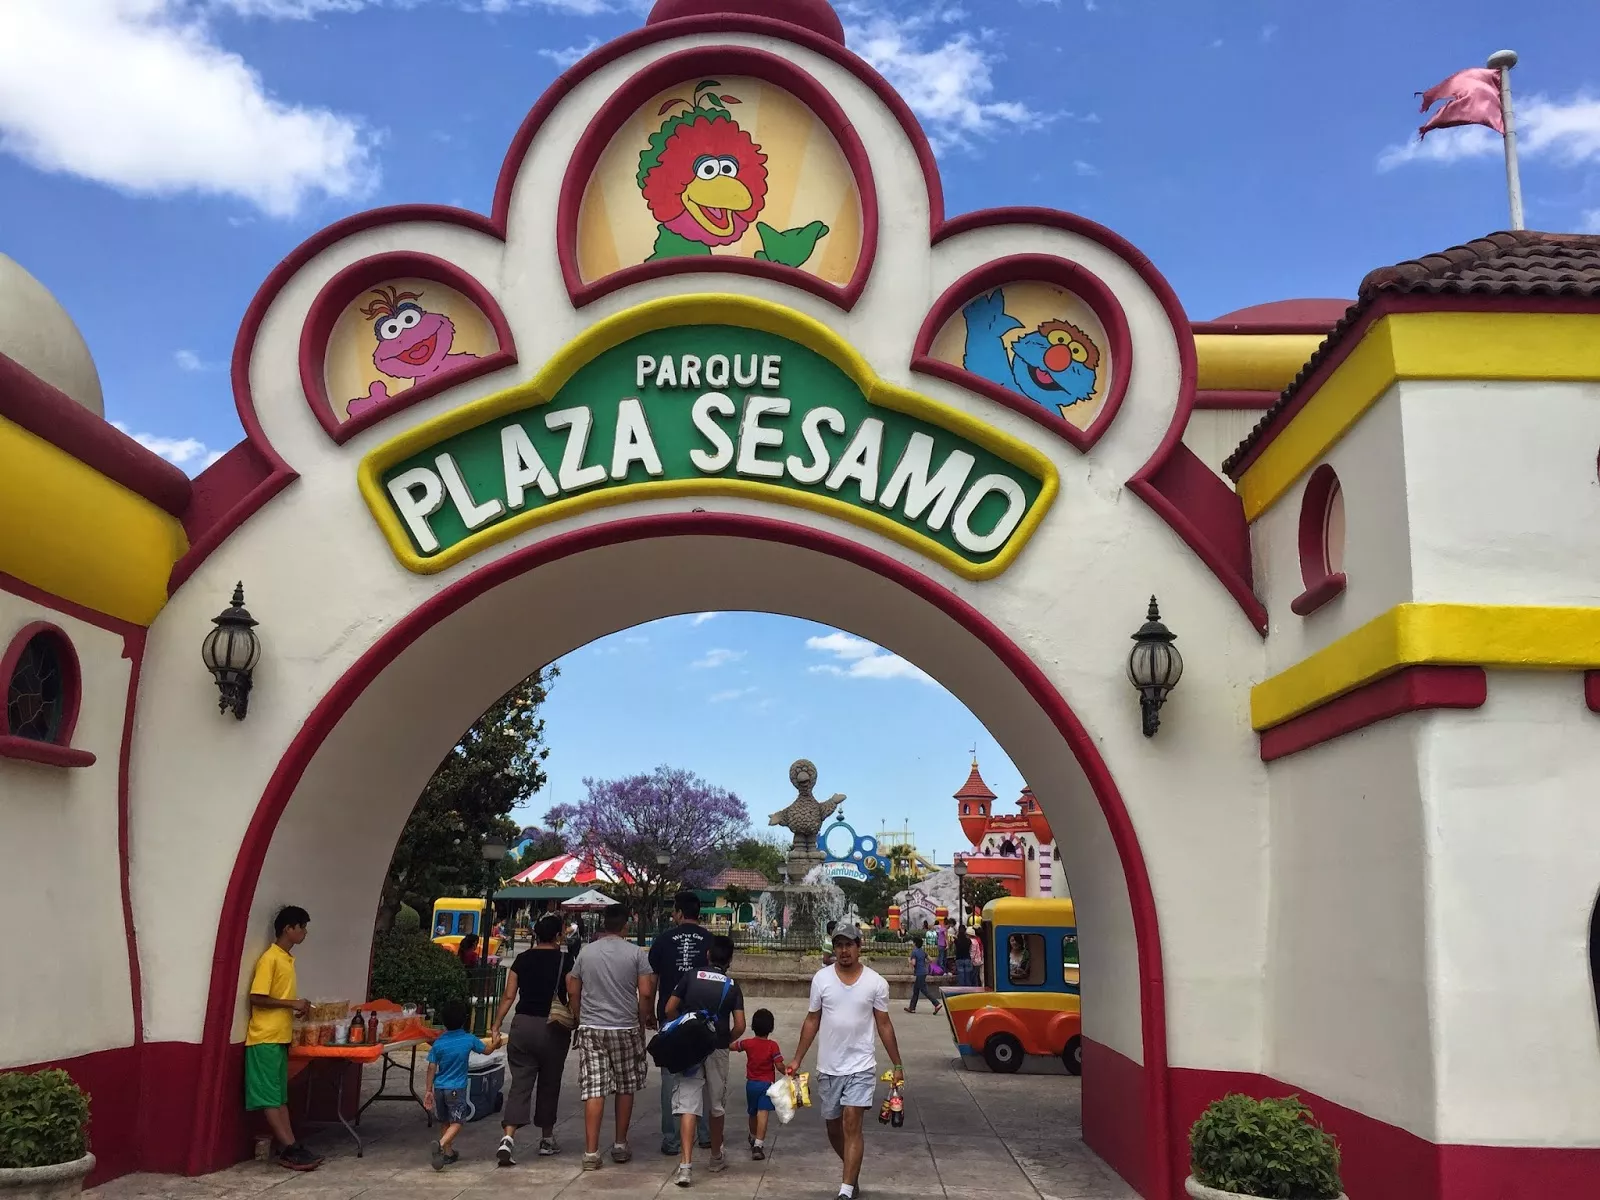 Plaza Sesamo Park in Mexico, North America | Amusement Parks & Rides - Rated 3.4